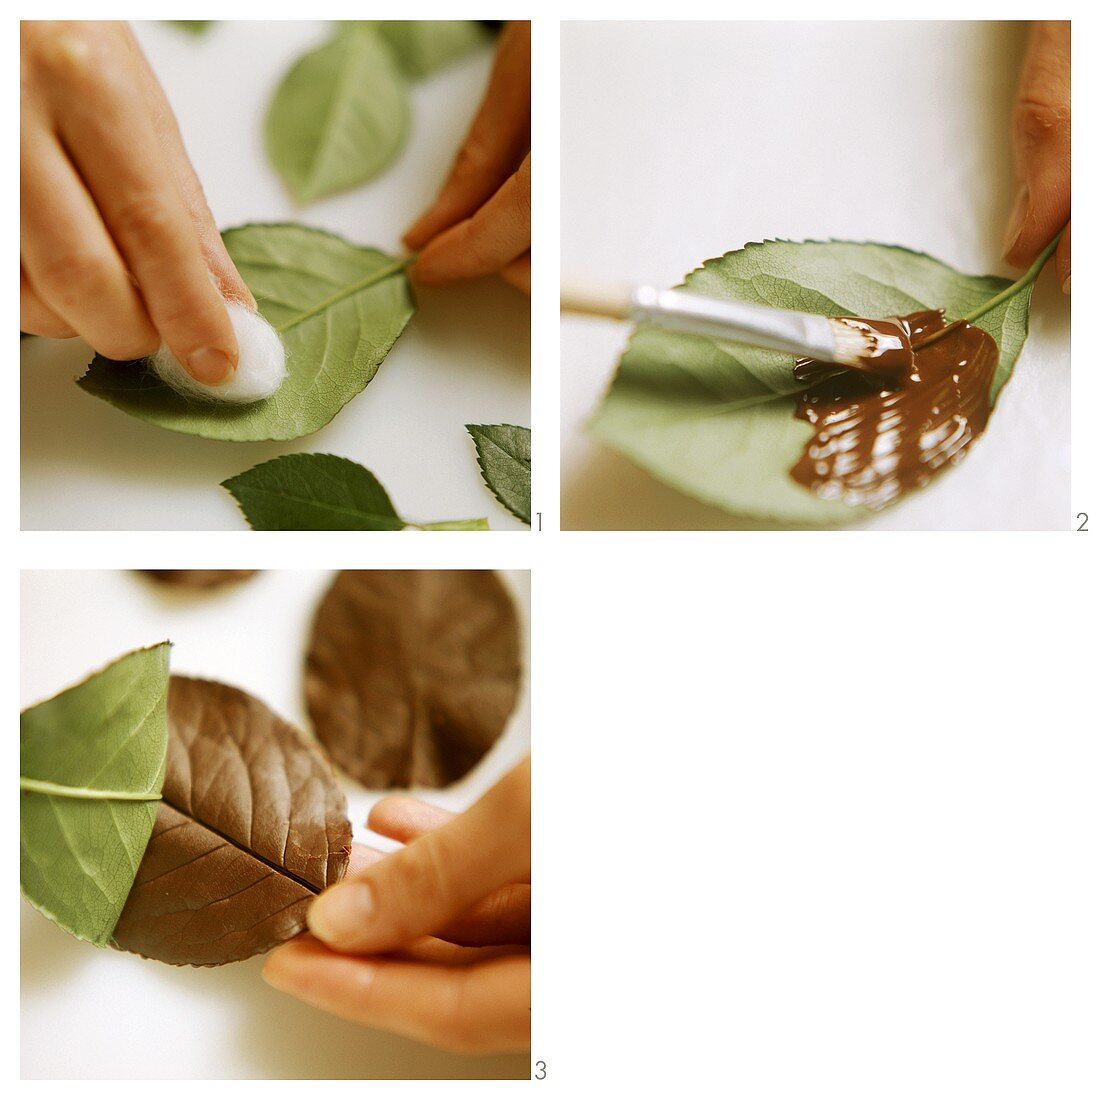 Making chocolate leaves